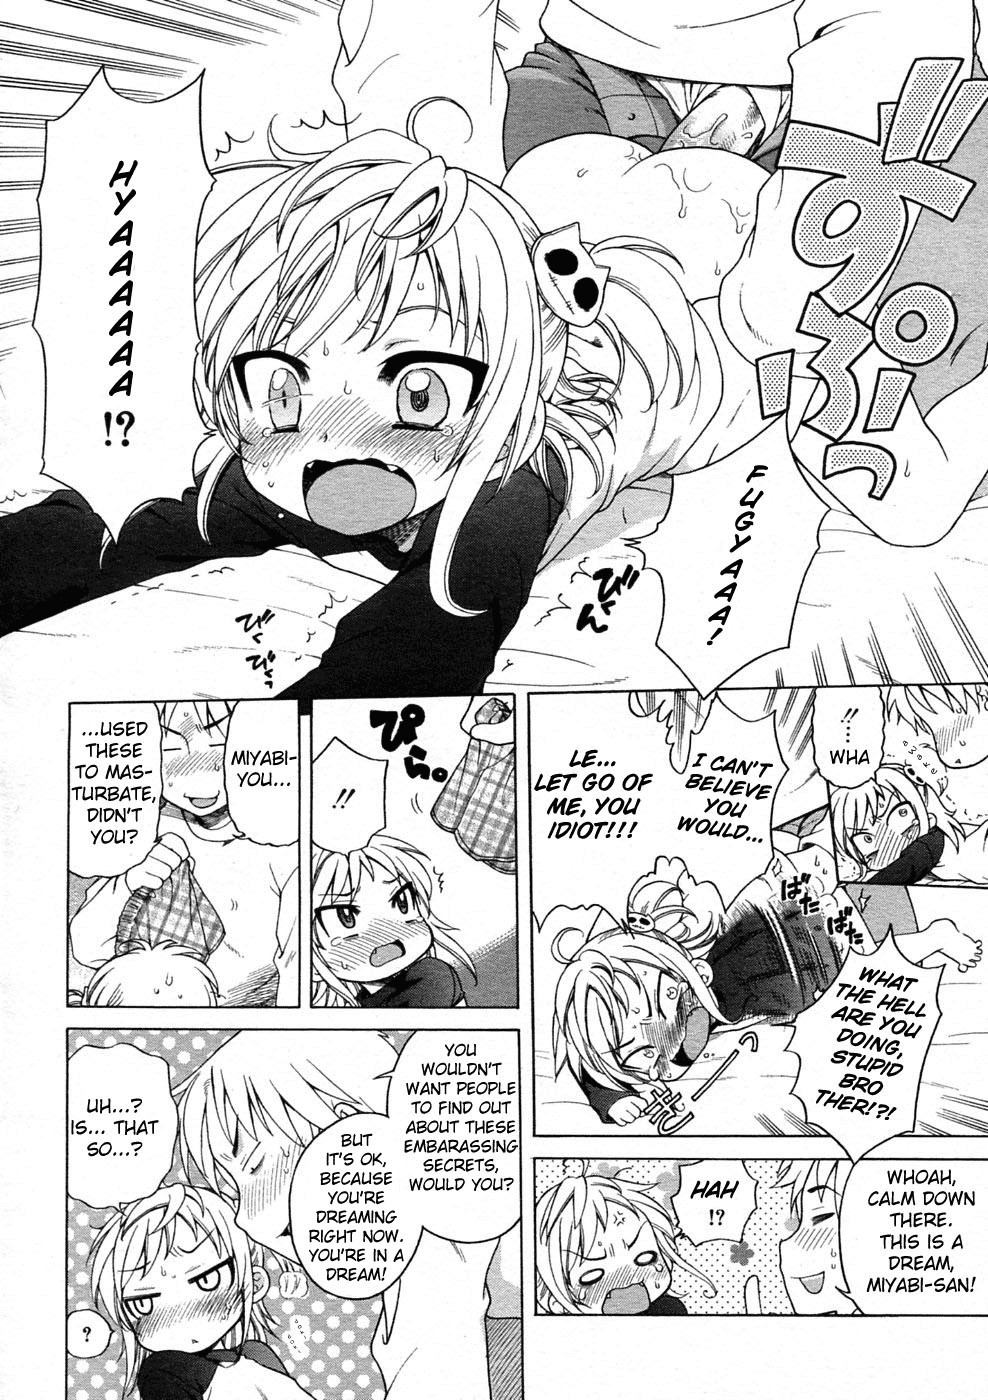 Mayabi Dreamin 11 hentai manga